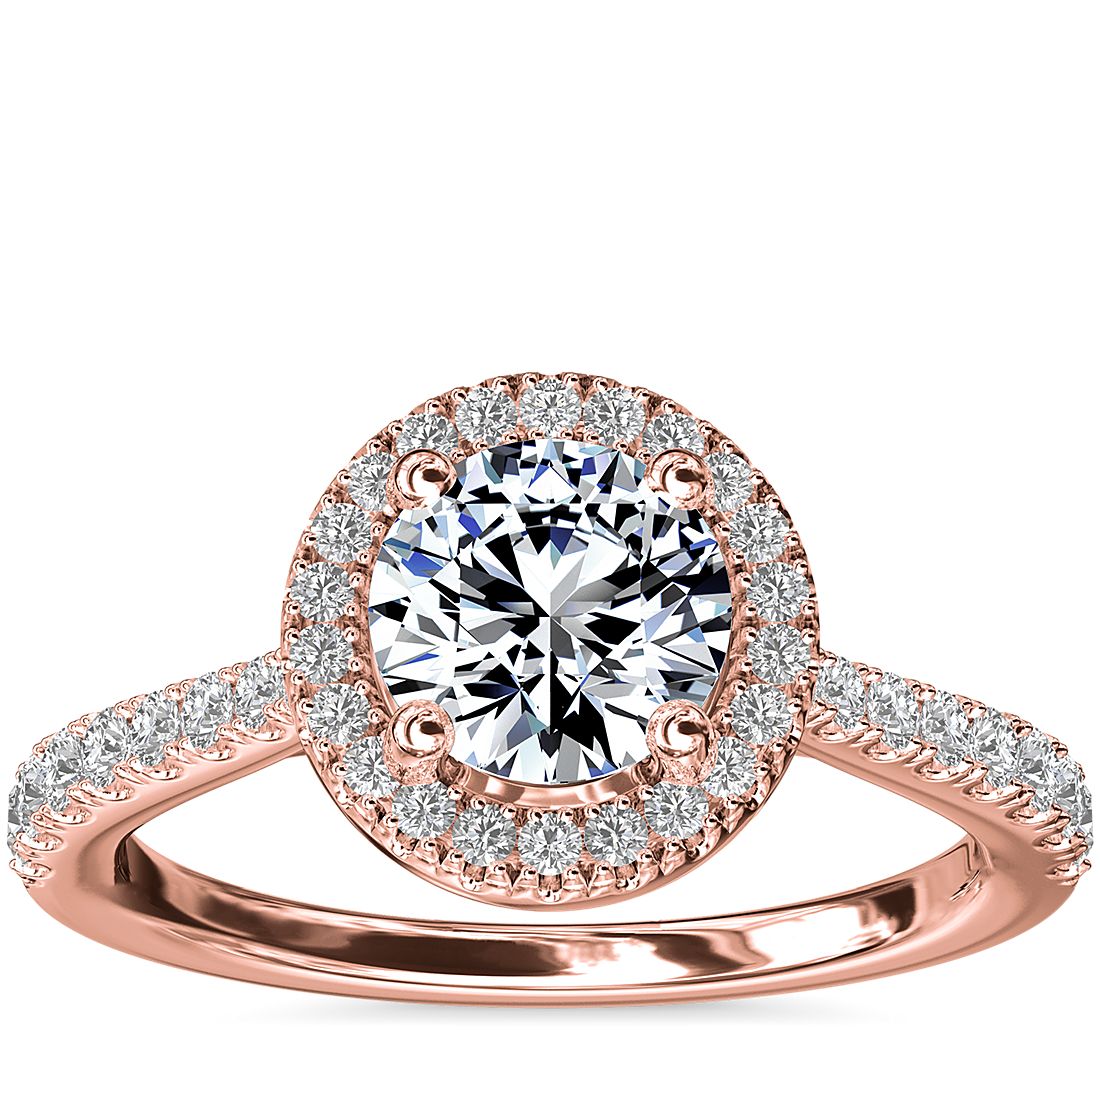 Ib dekorere stereoanlæg Diamond Bridge Halo Diamond Engagement Ring in 14k Rose Gold (1/3 ct. tw.)  | Blue Nile